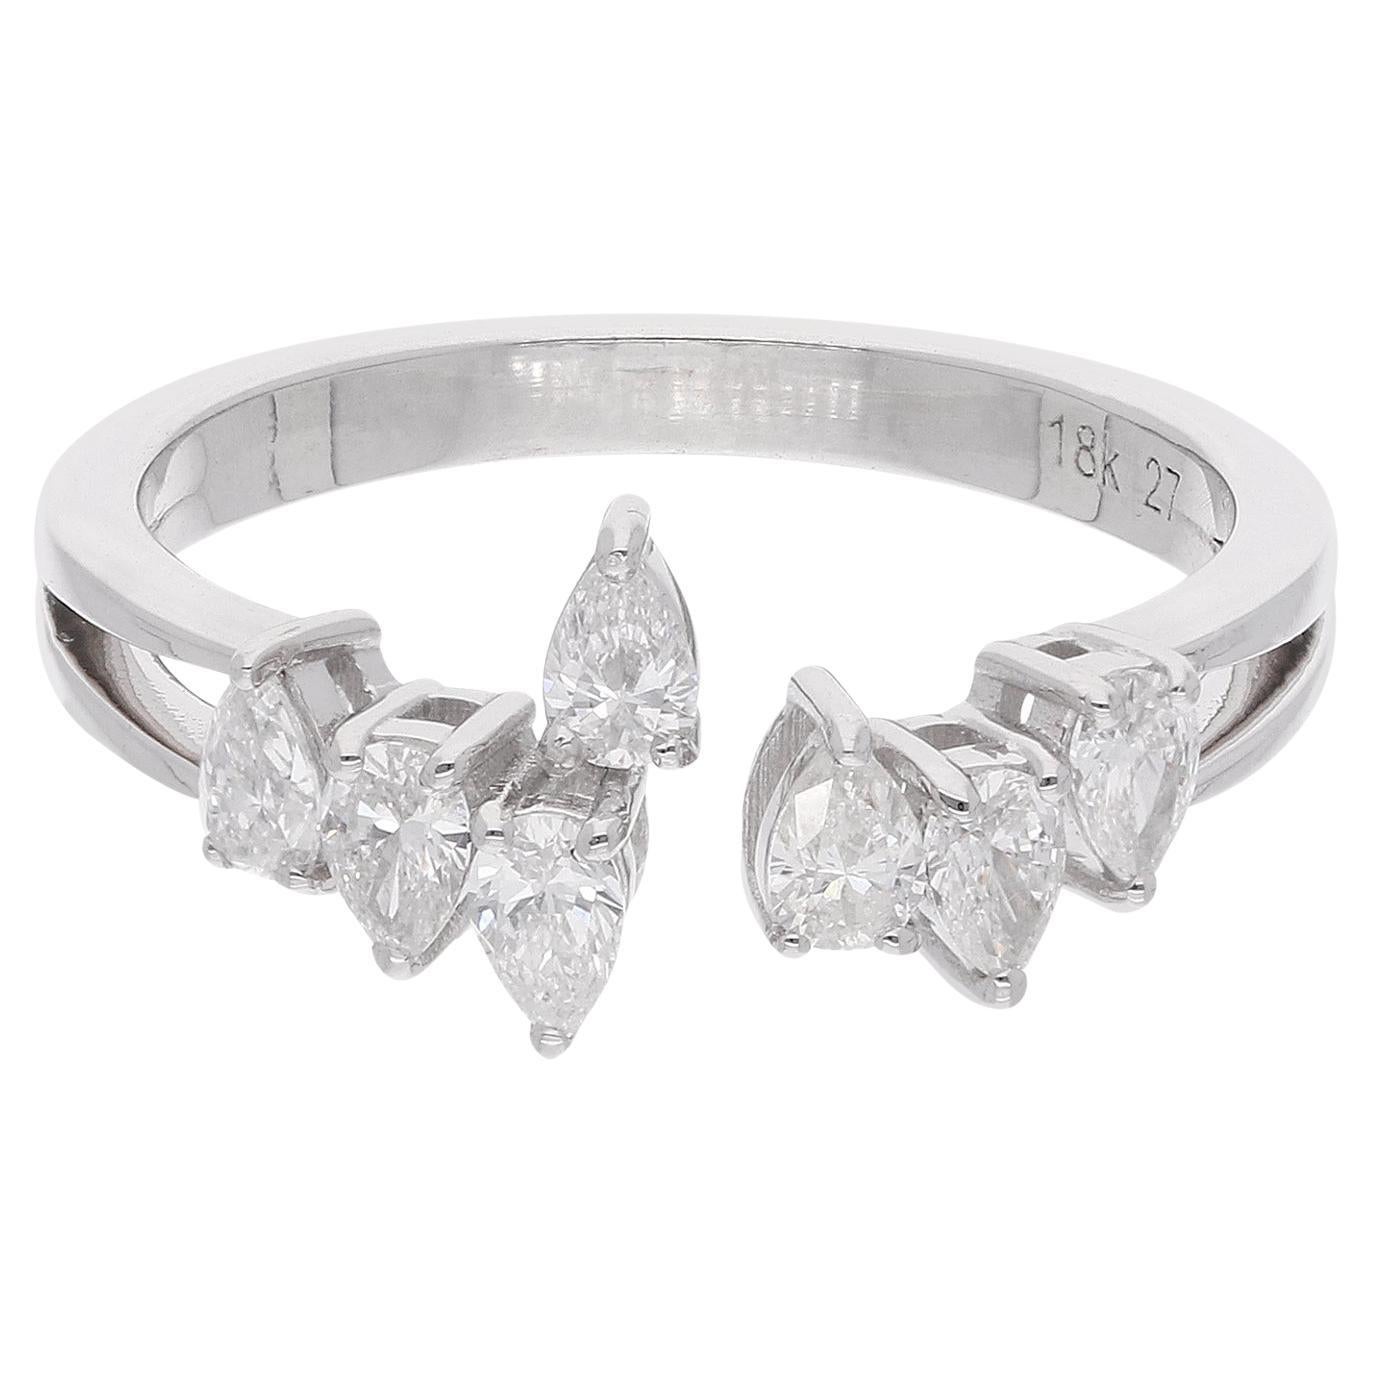 0.55 Carat Pear Diamond Promise Ring Solid 14 Karat White Gold Handmade Jewelry